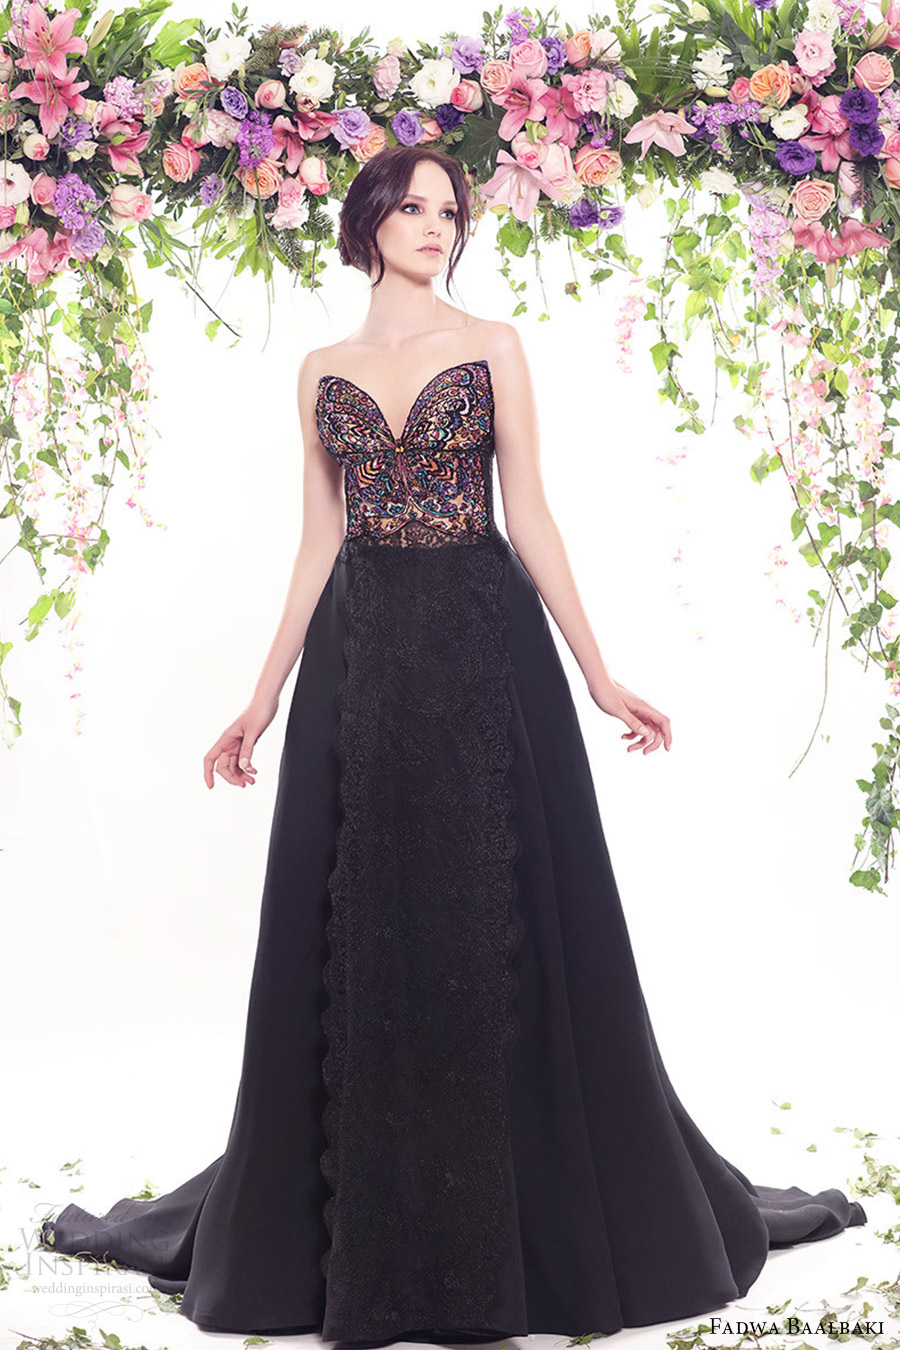 fadwa baalbaki spring 2016 couture strapless sweetheart black ball gown multi color bodice mv